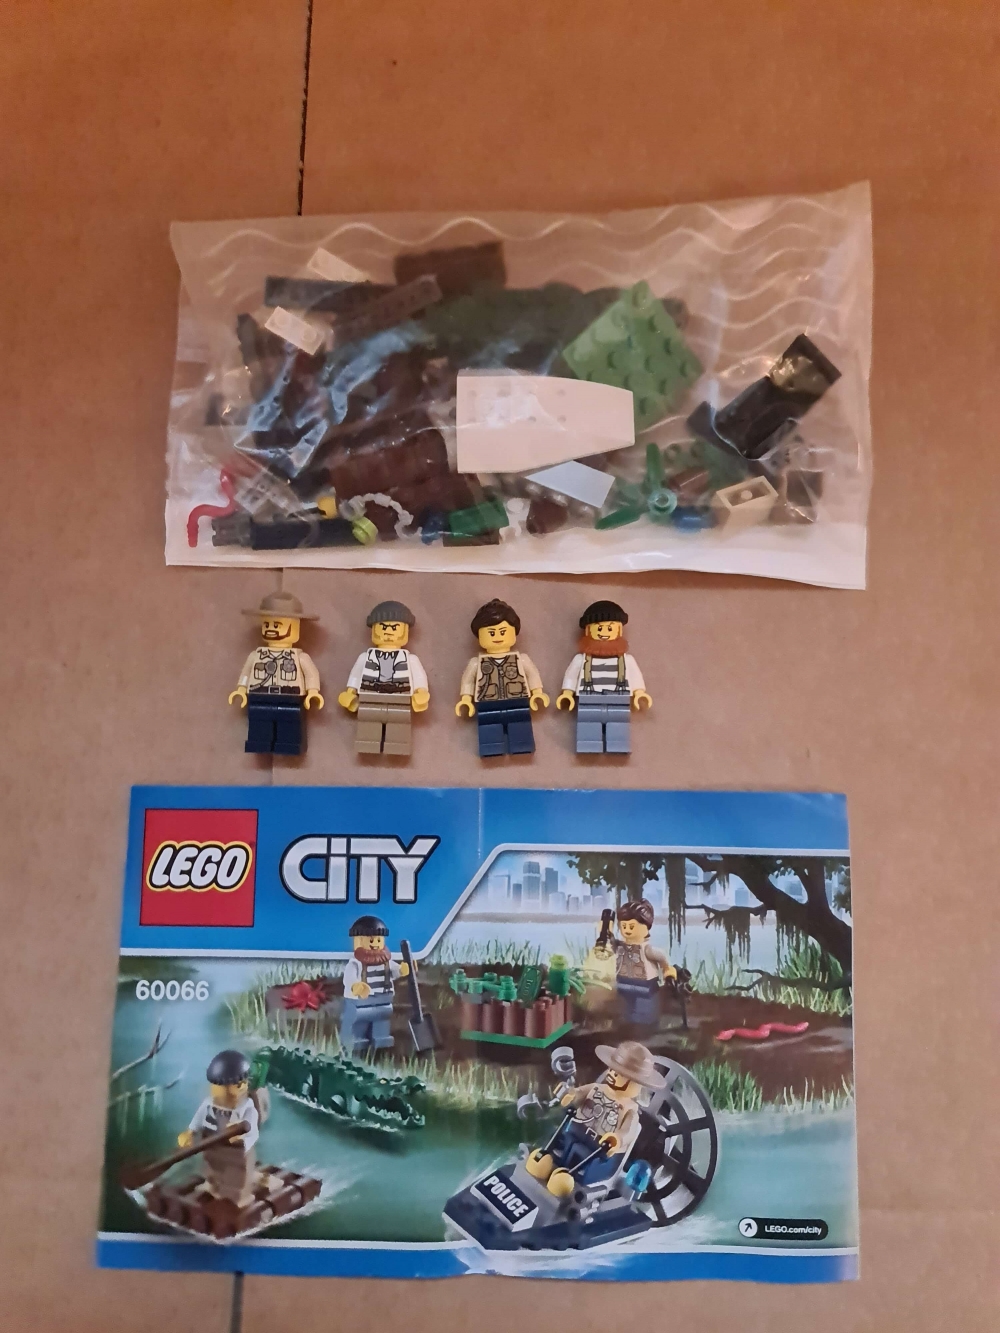 Sett 60066 fra Lego City serien. 

Meget pent. Komplett med manual. 